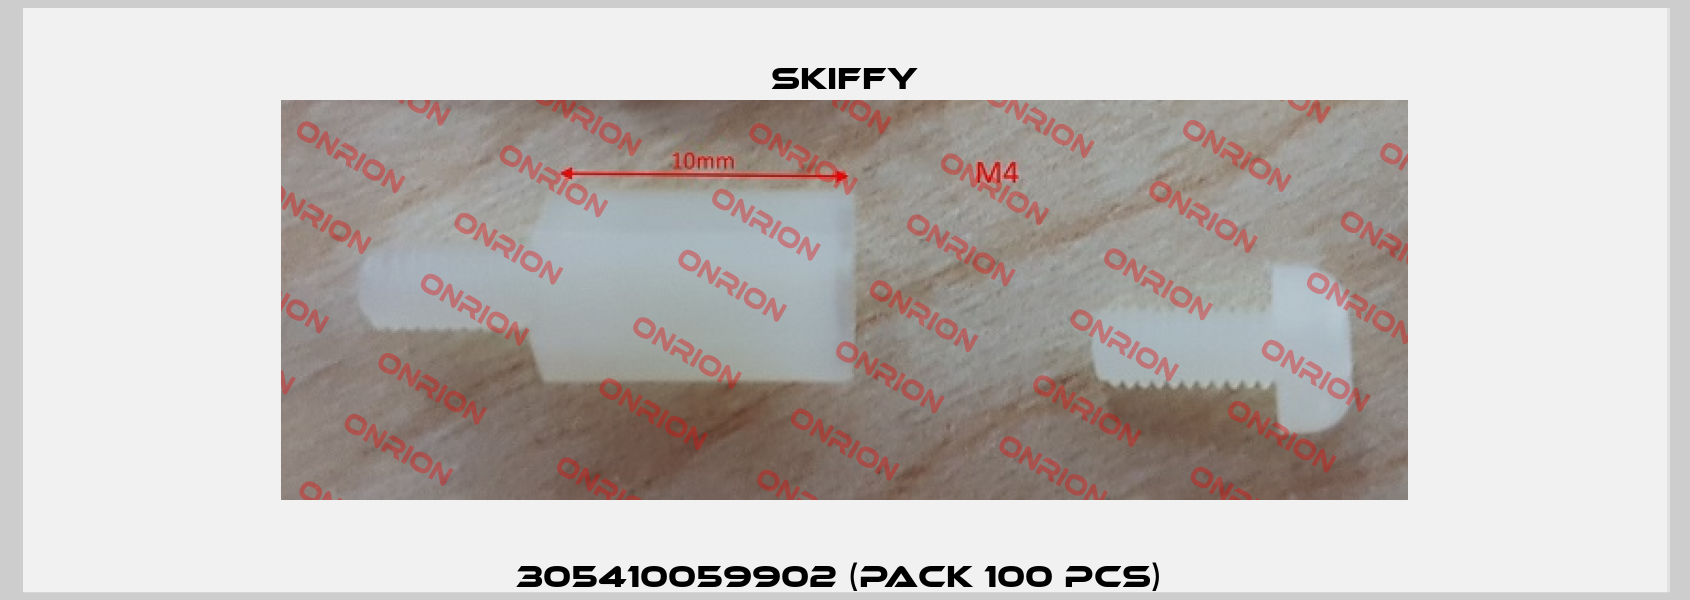 305410059902 (pack 100 pcs)  Skiffy